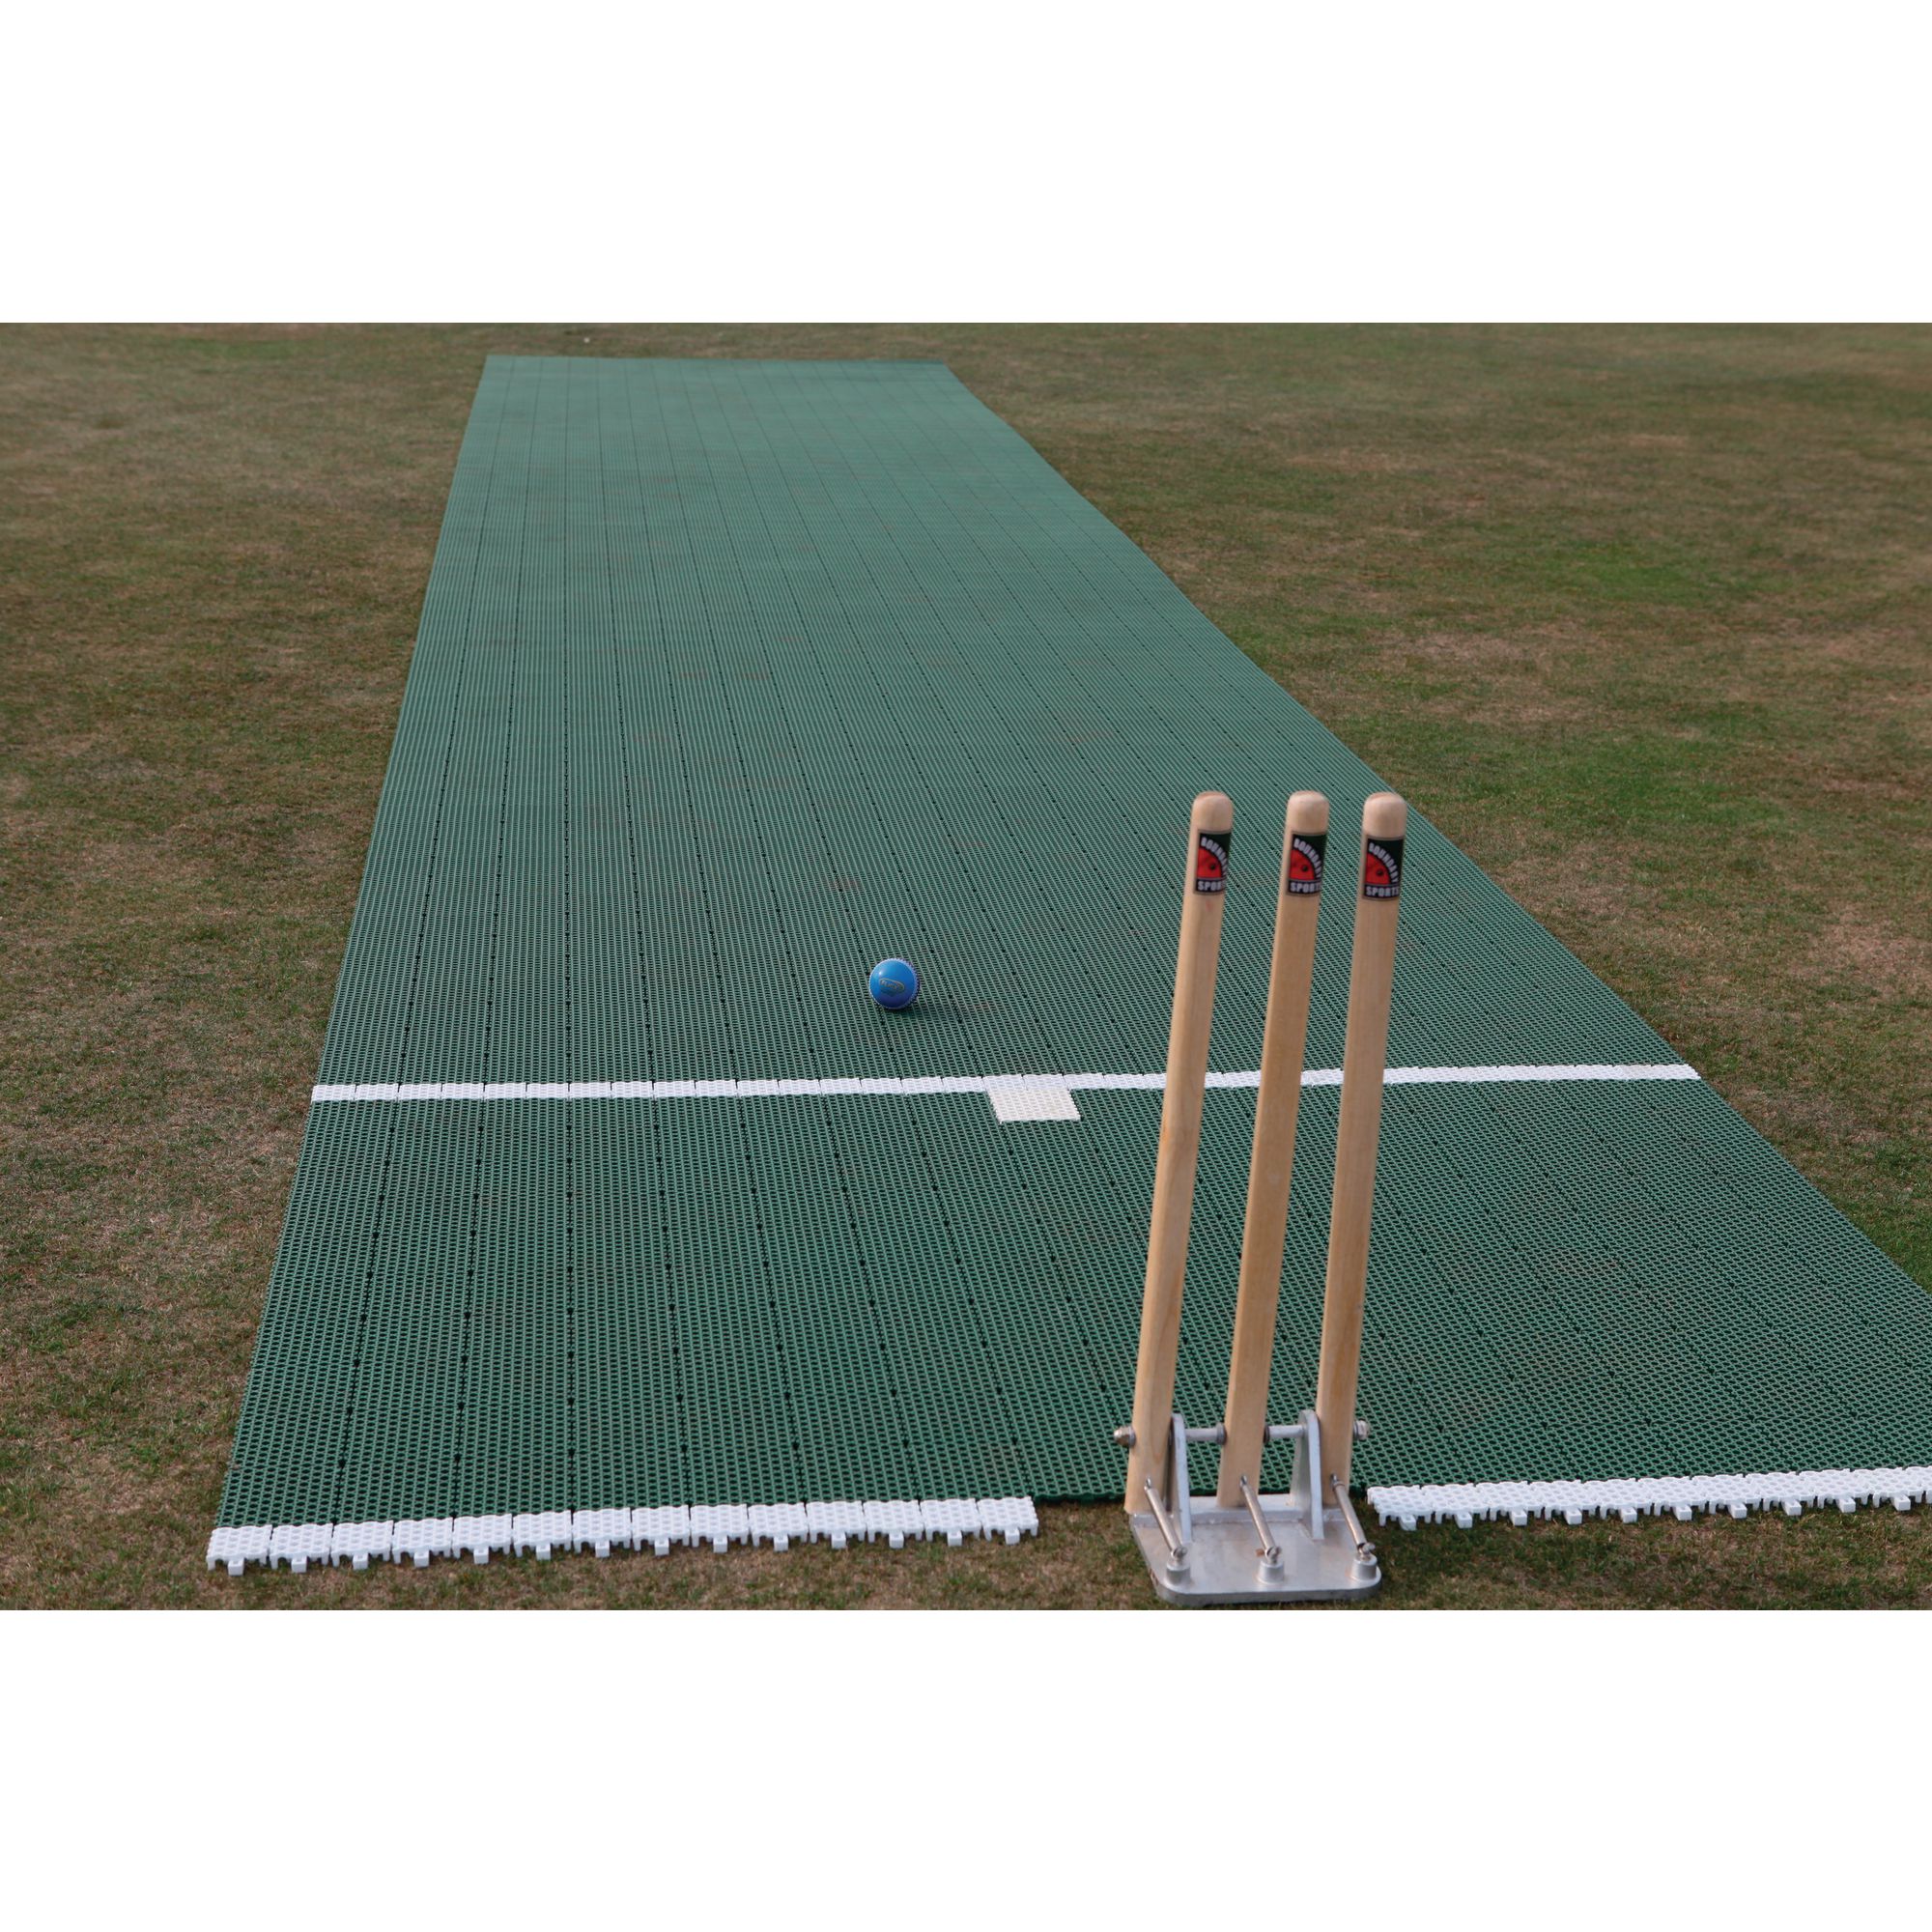 Flicx Cricket Match Pitch 18.12x1.8m